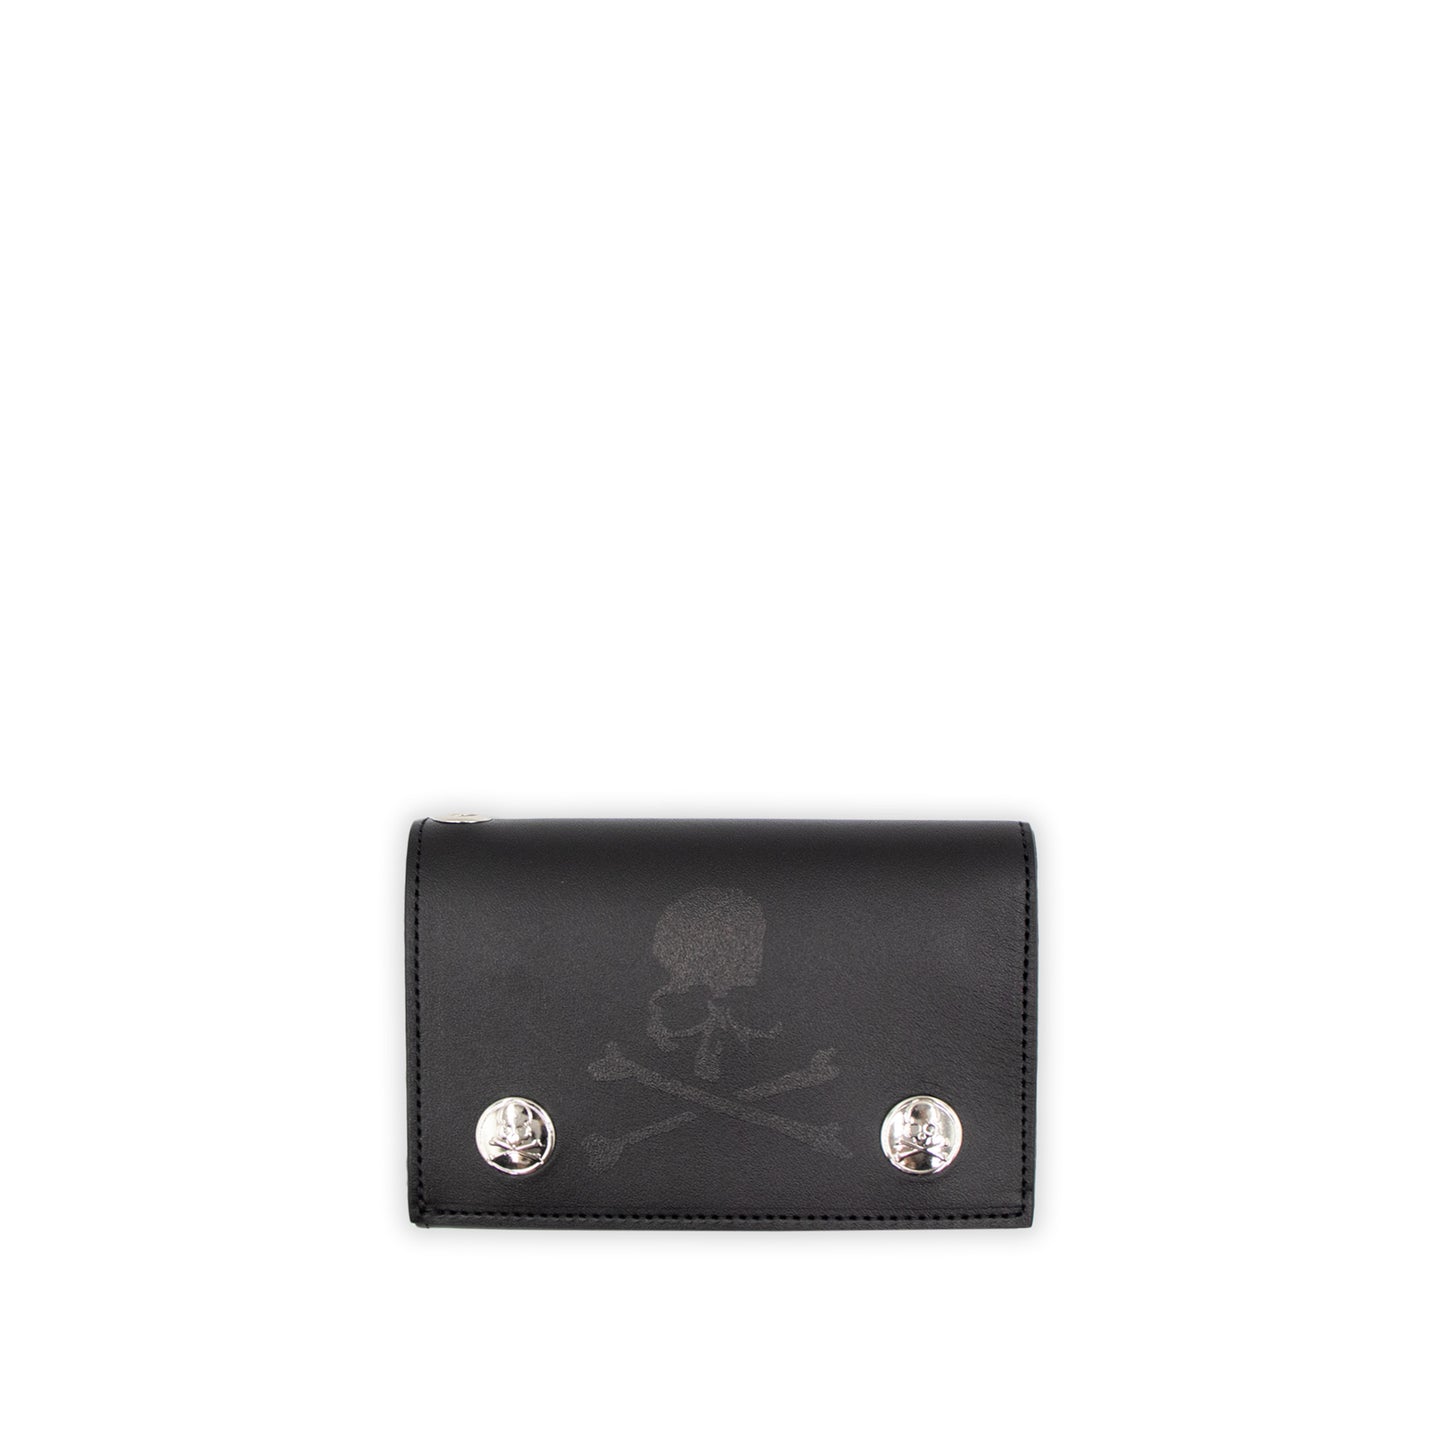 Mastermind World Leather Wallet in Black